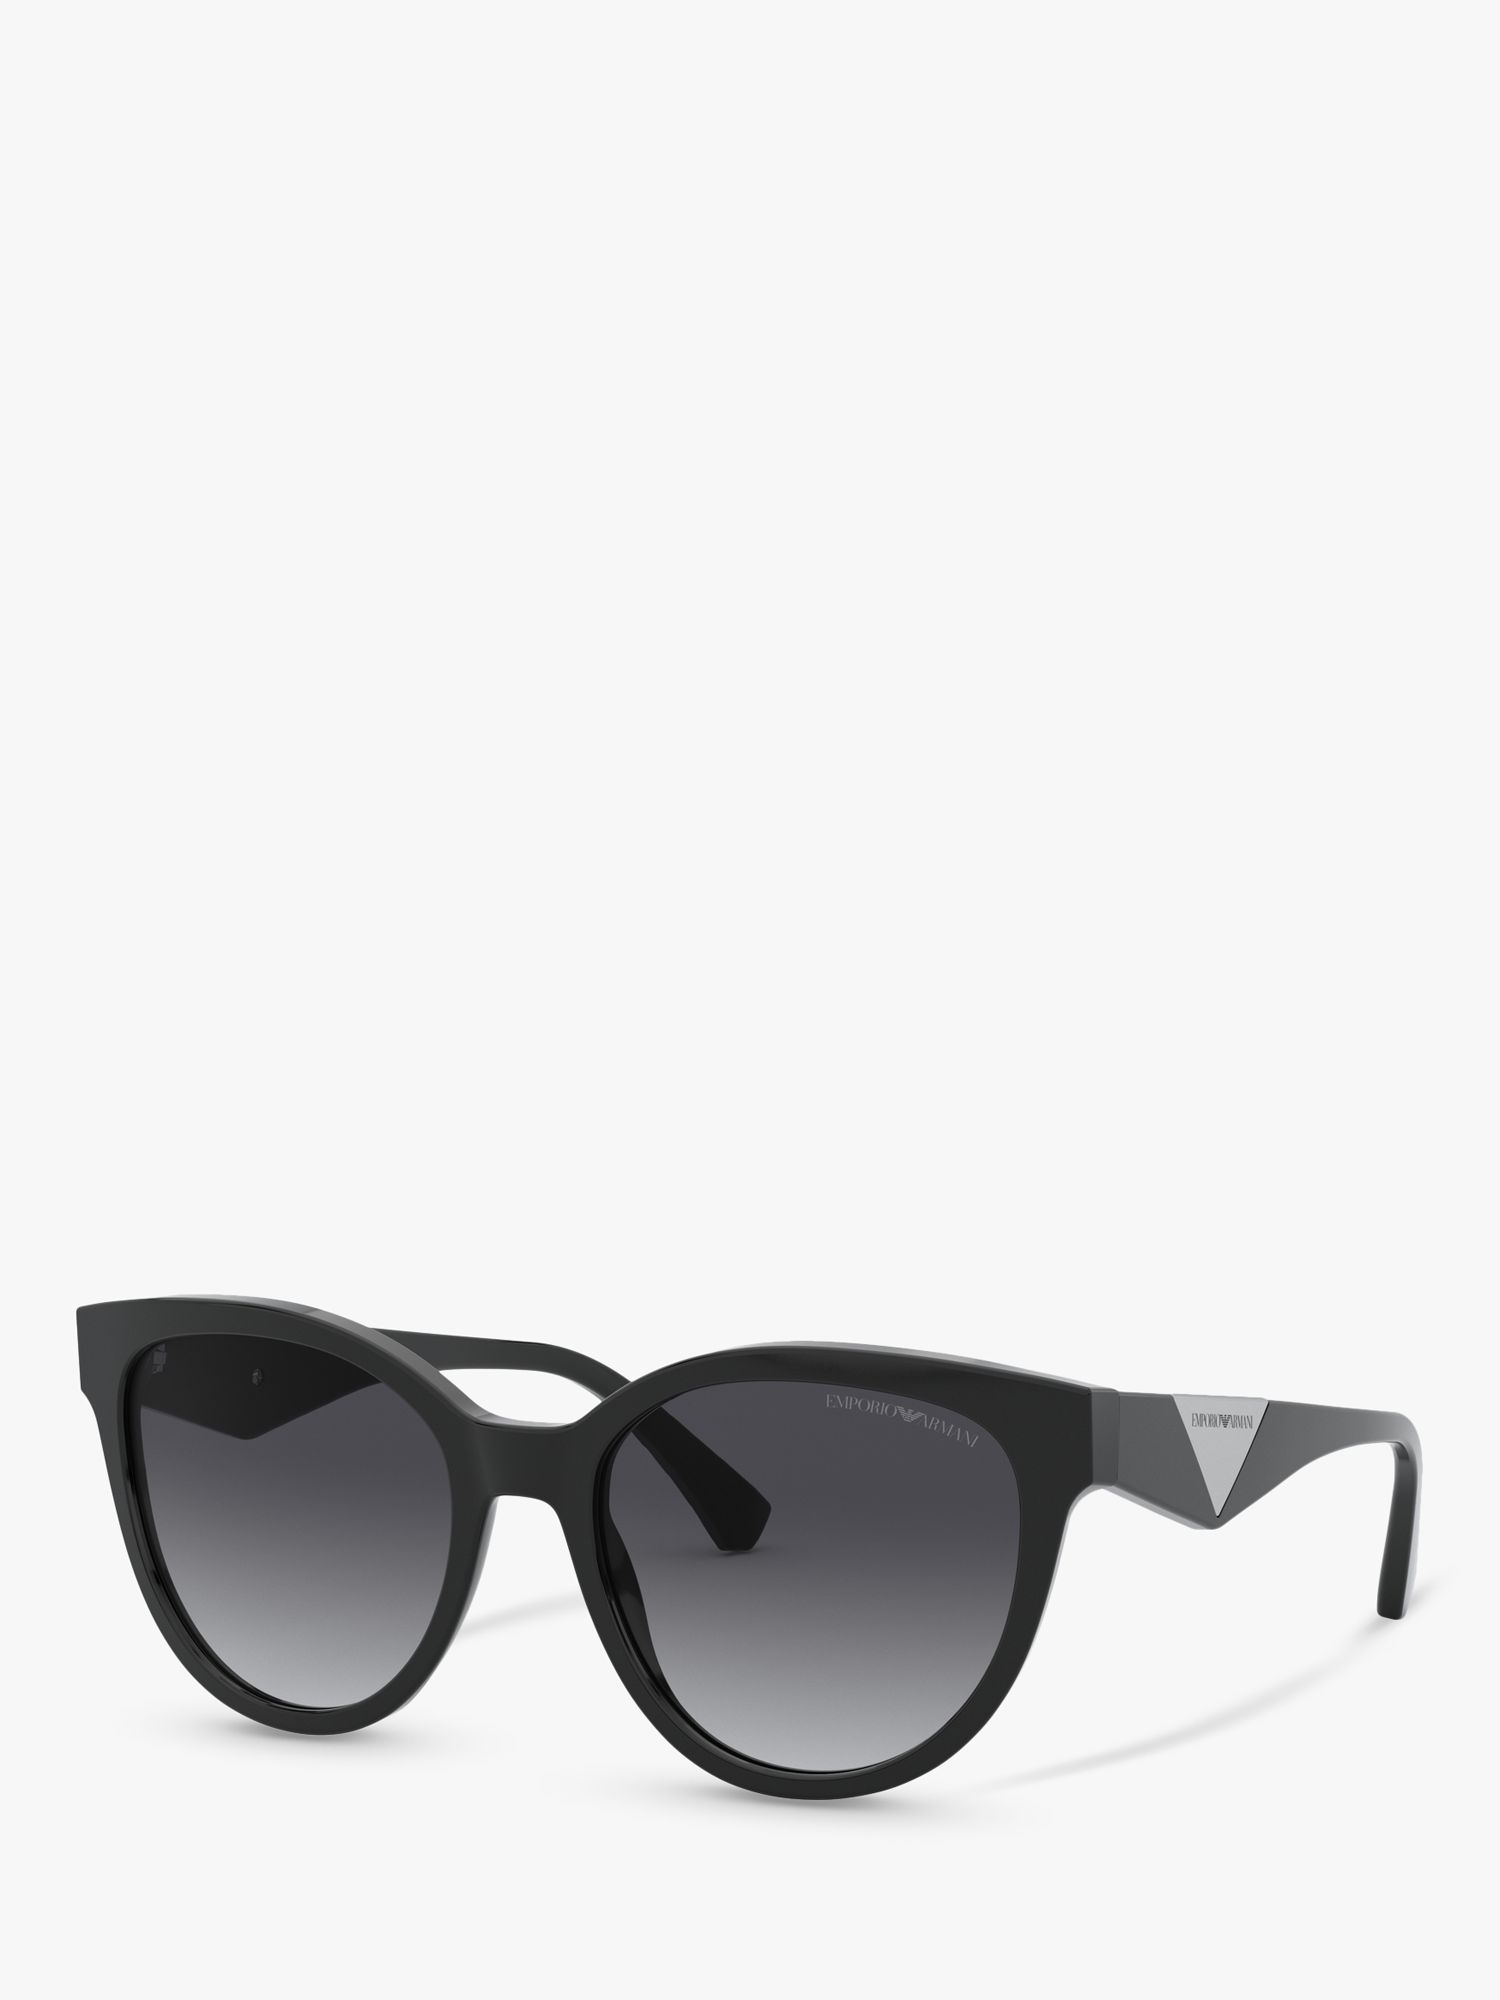 Giorgio Armani 53mm Cat Eye Sunglasses in Beige Womens Sunglasses Giorgio Armani Sunglasses Natural 